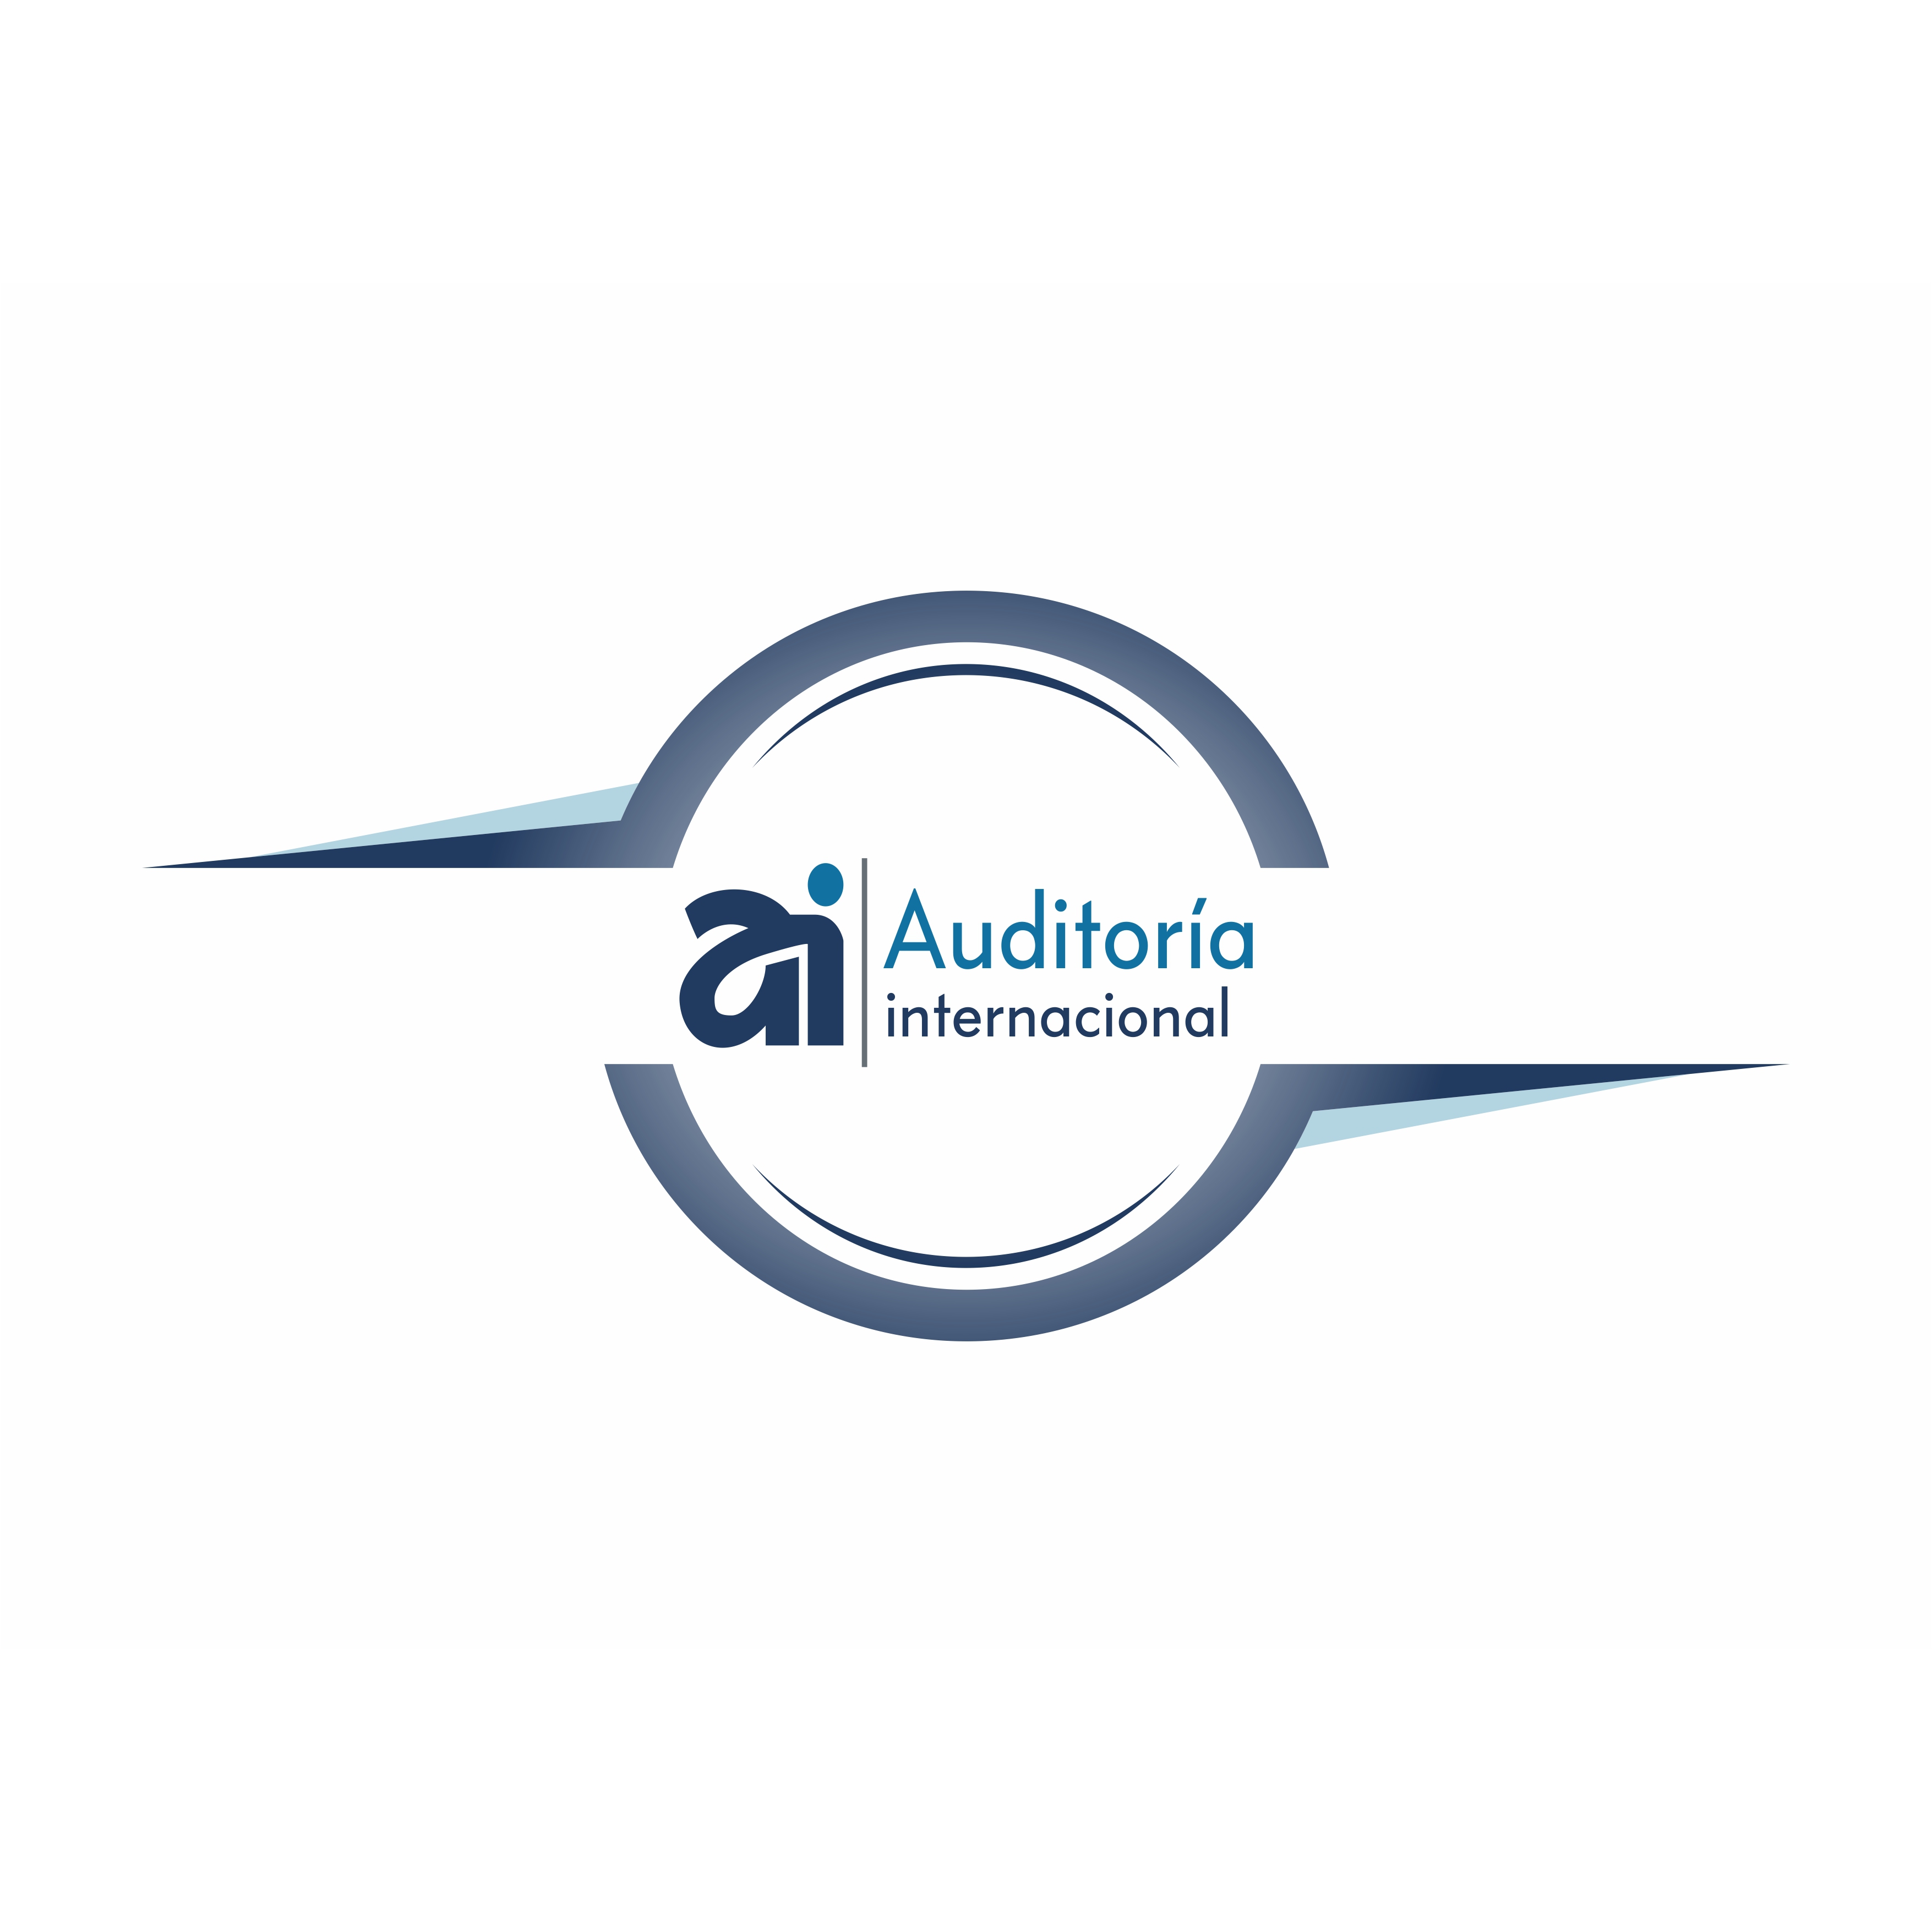 Auditoría Internacional Logo